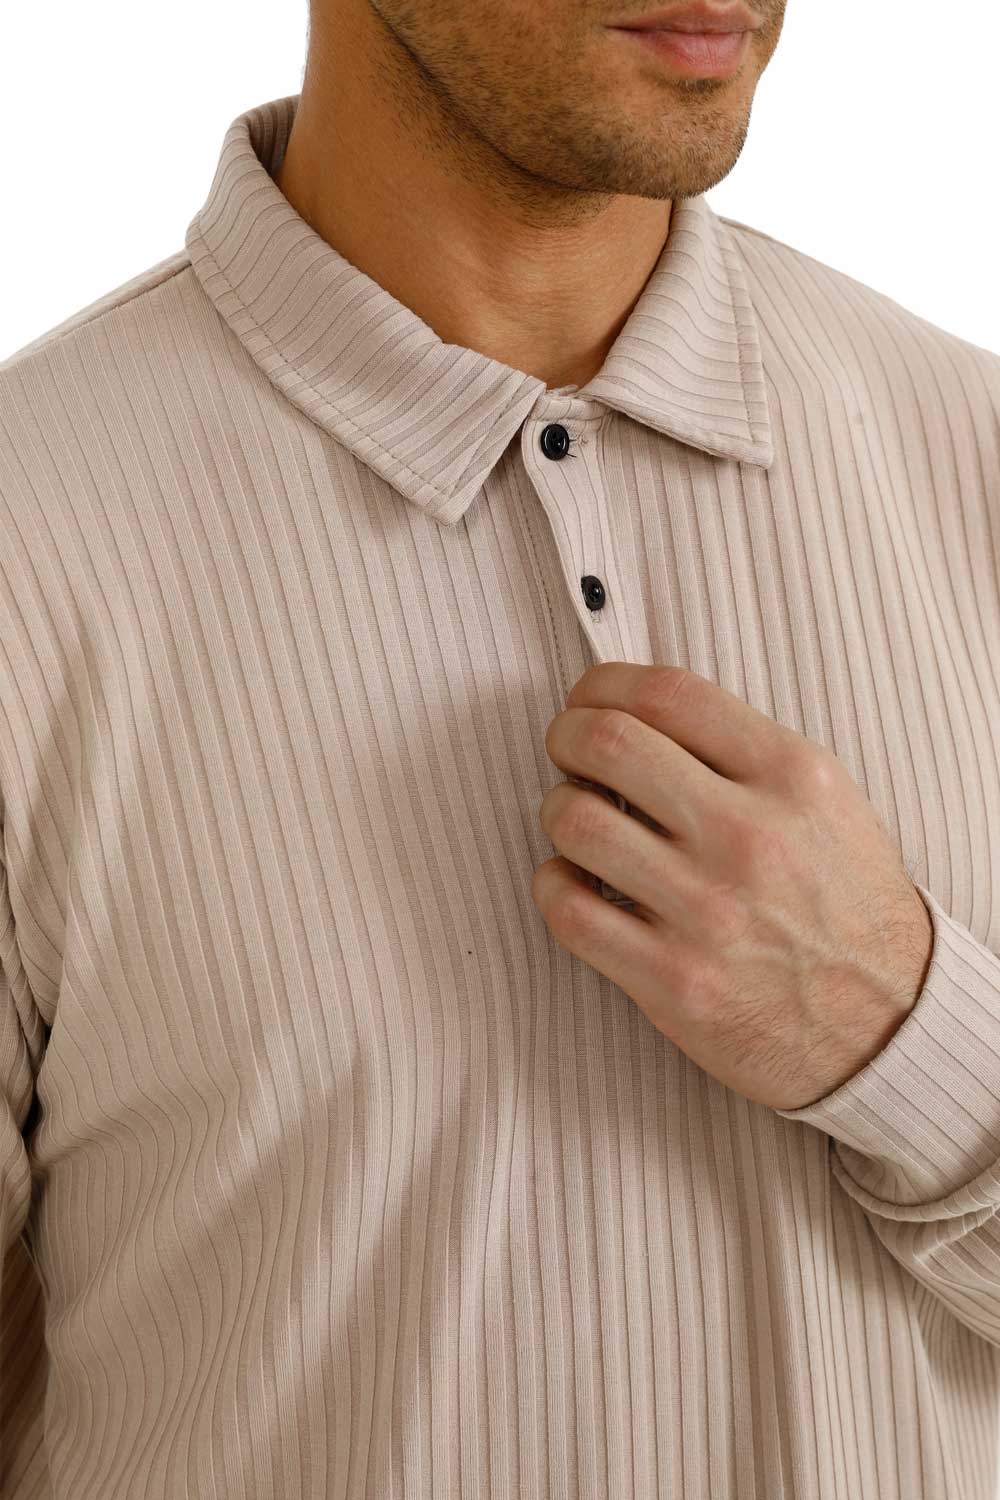 Gingtto's Men Fashion Polo Shirts: Where Sophistication Meets Casual